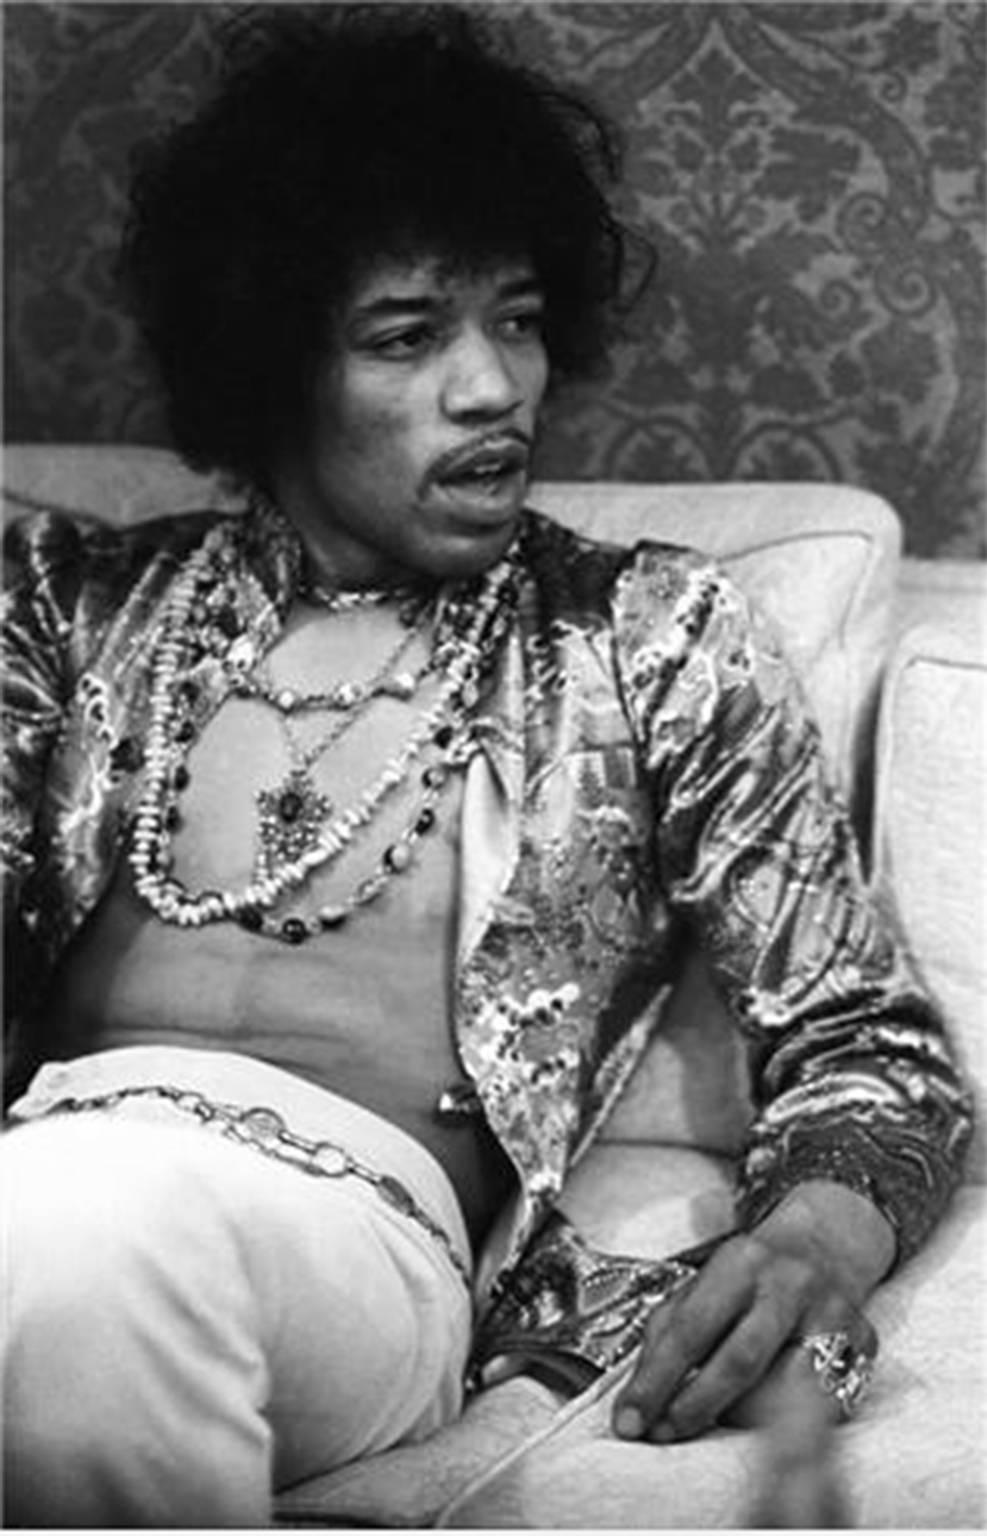 Henry Diltz Portrait Photograph – Jimi Hendrix, Hollywood, Kalifornien, 1967